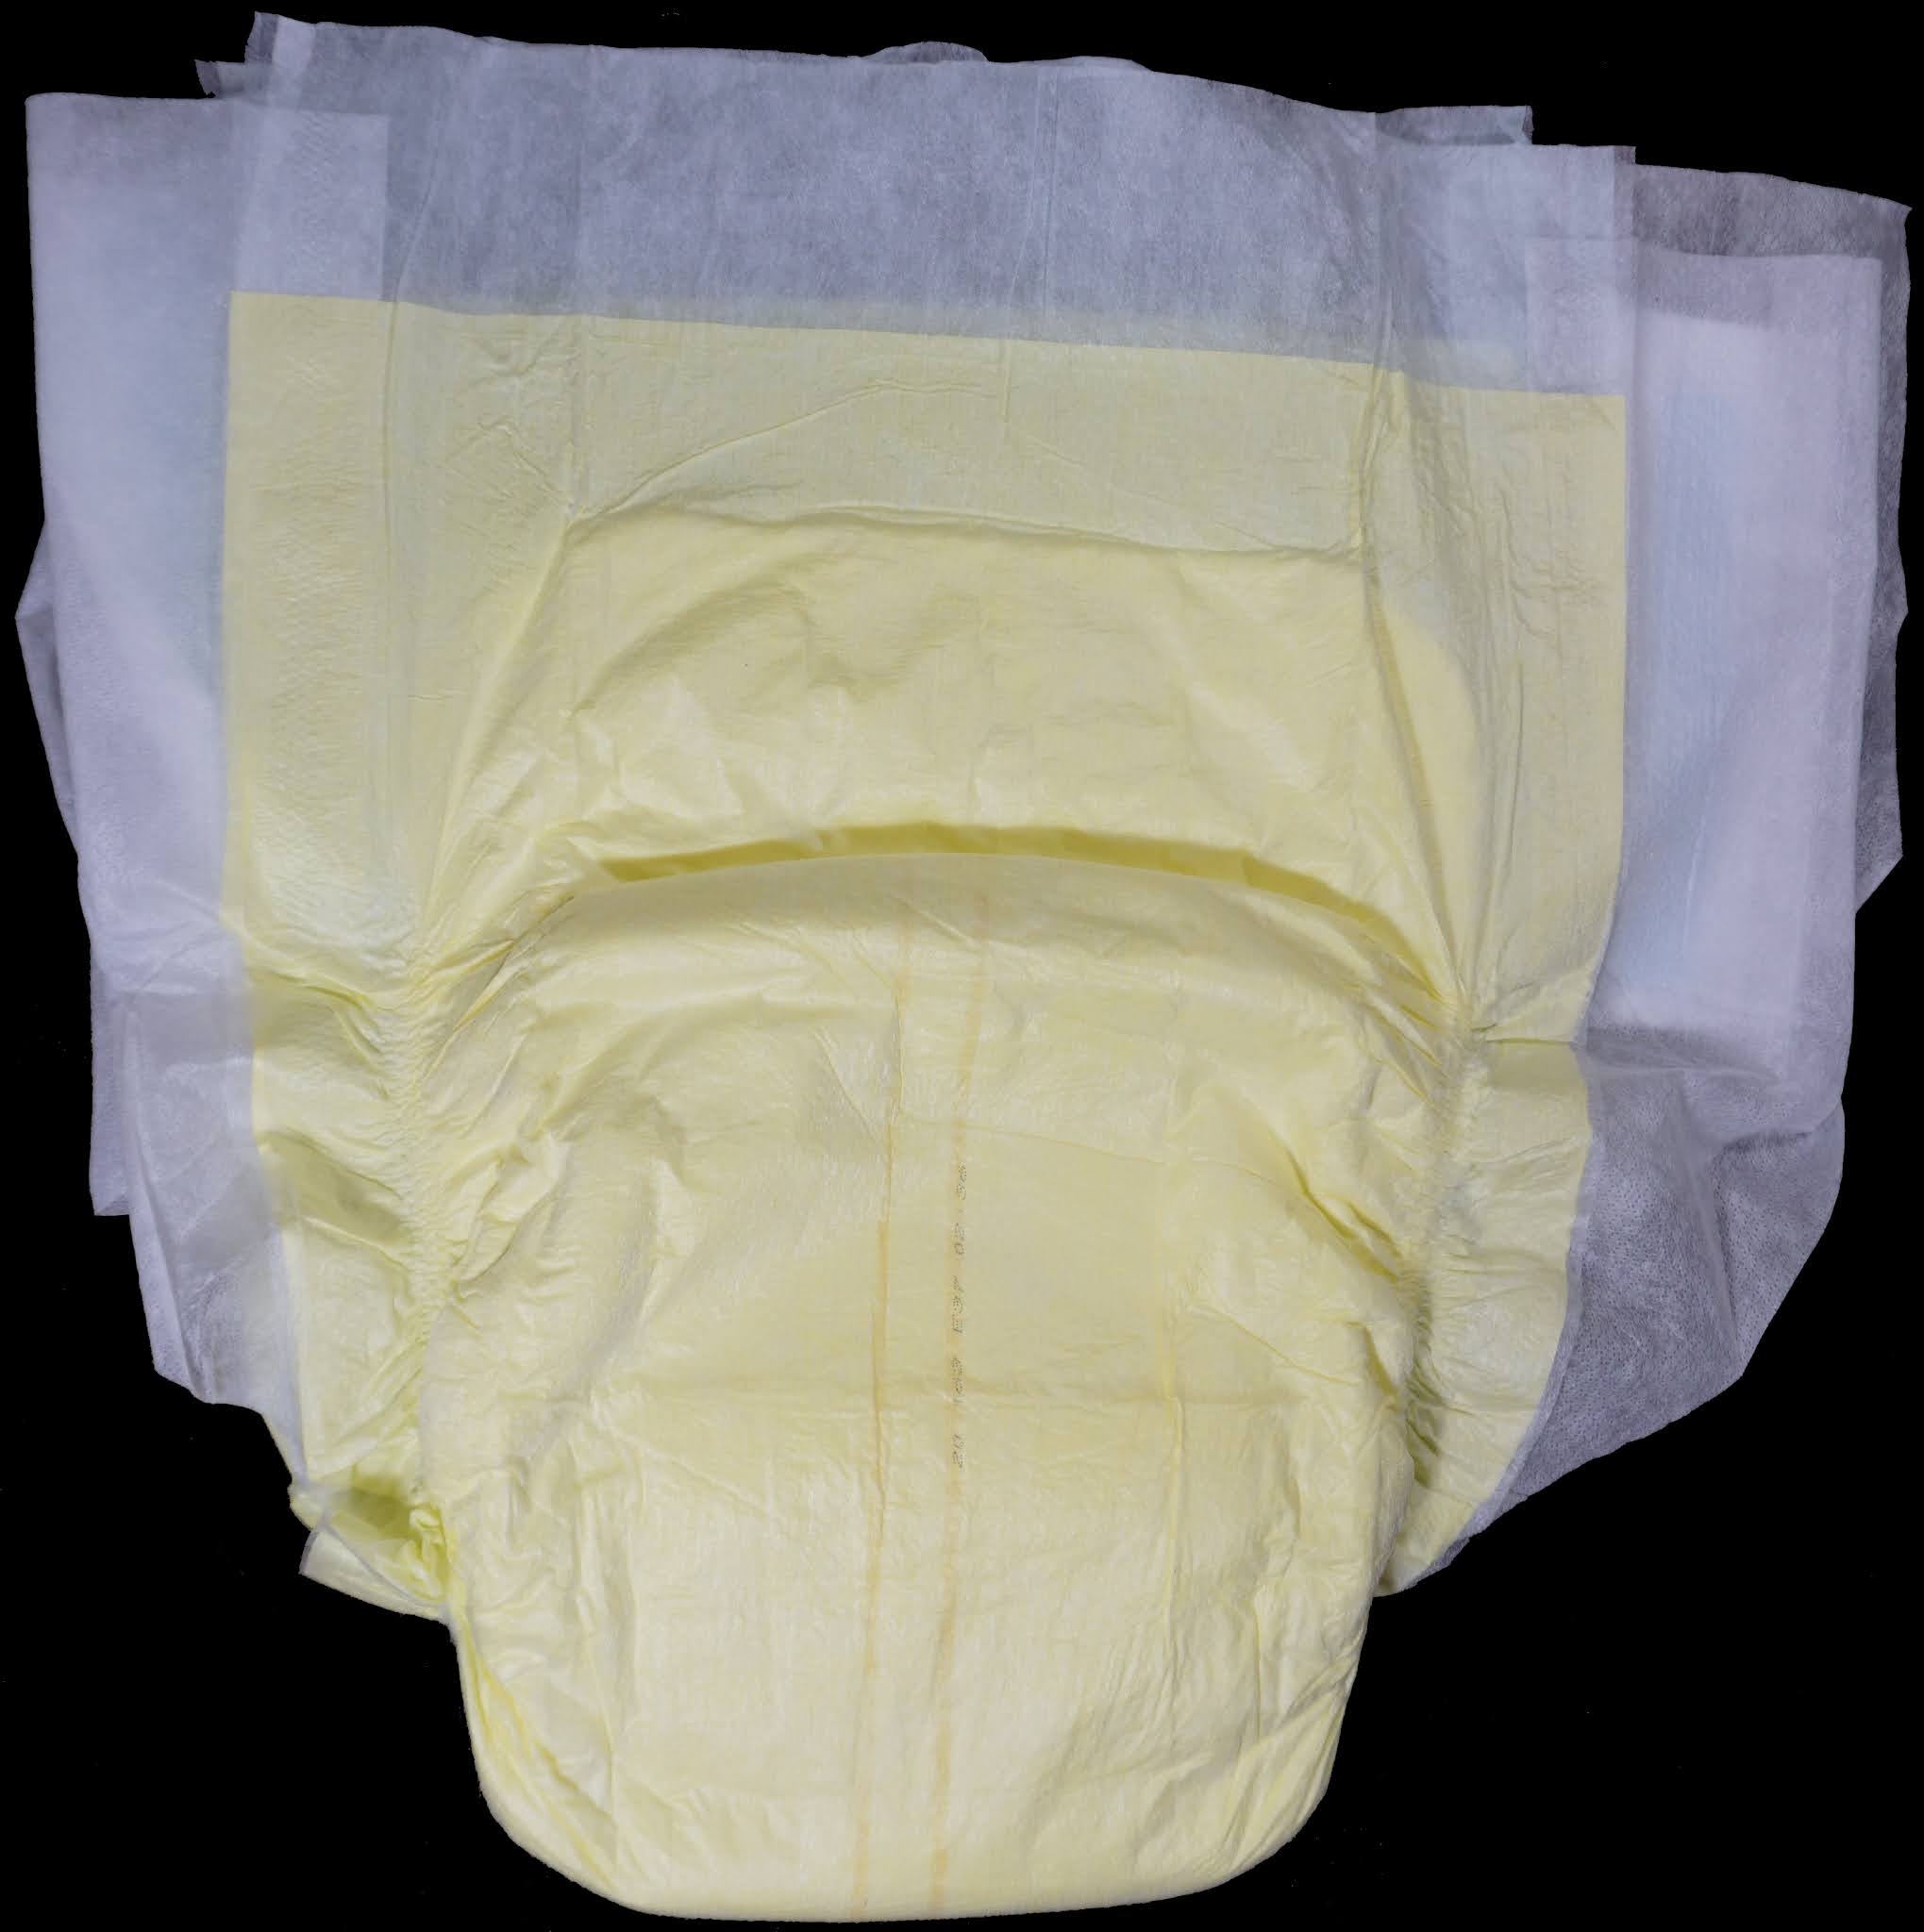 Diaper Metrics: Prevail Air Overnight Adult Diaper Review